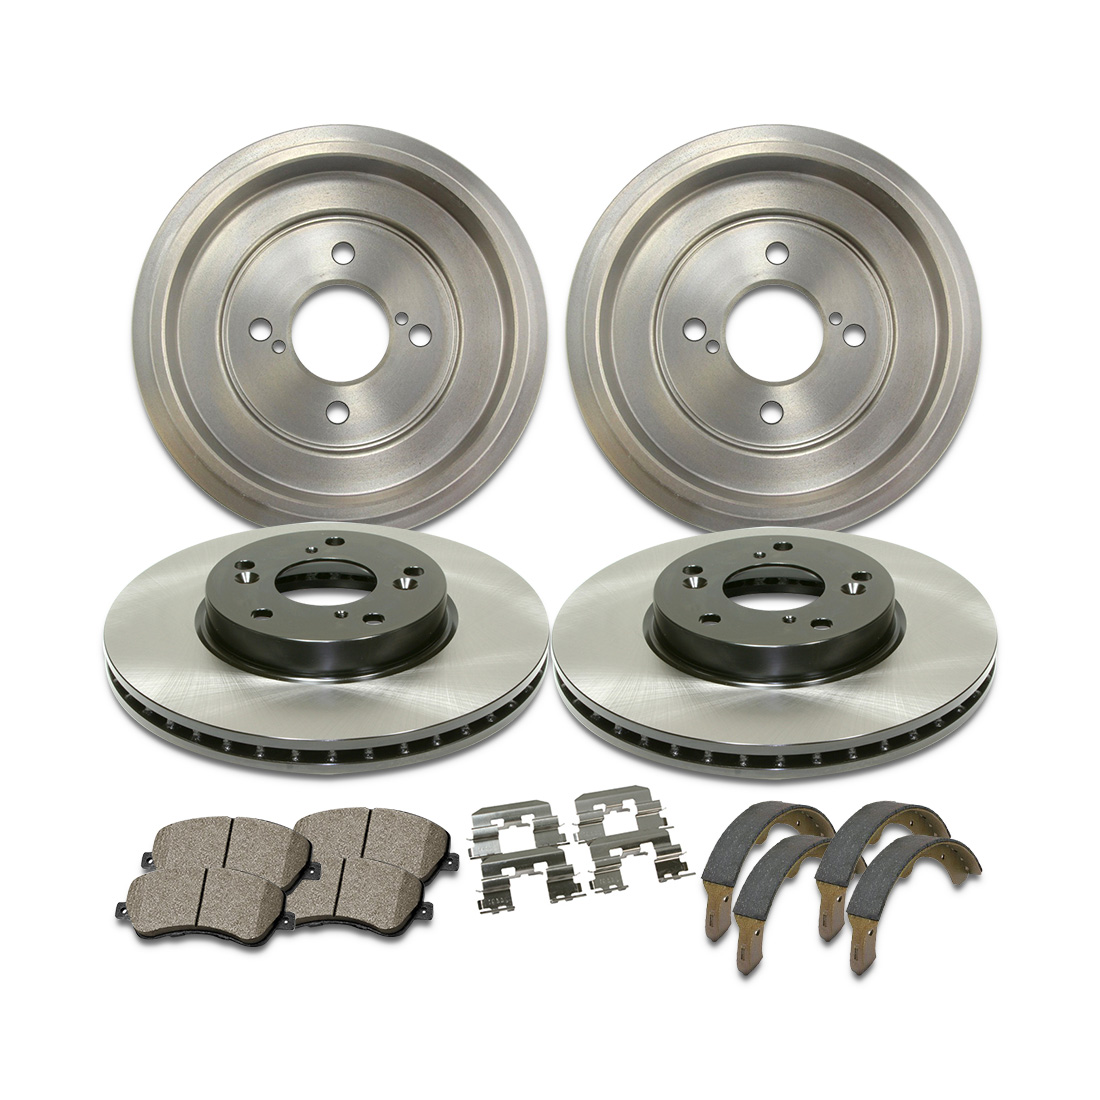 Centric Parts Front&Rear Premium Brake Rotor Ceramic Pad Drum Shoe 6PCS For 2003-2006 Tundra